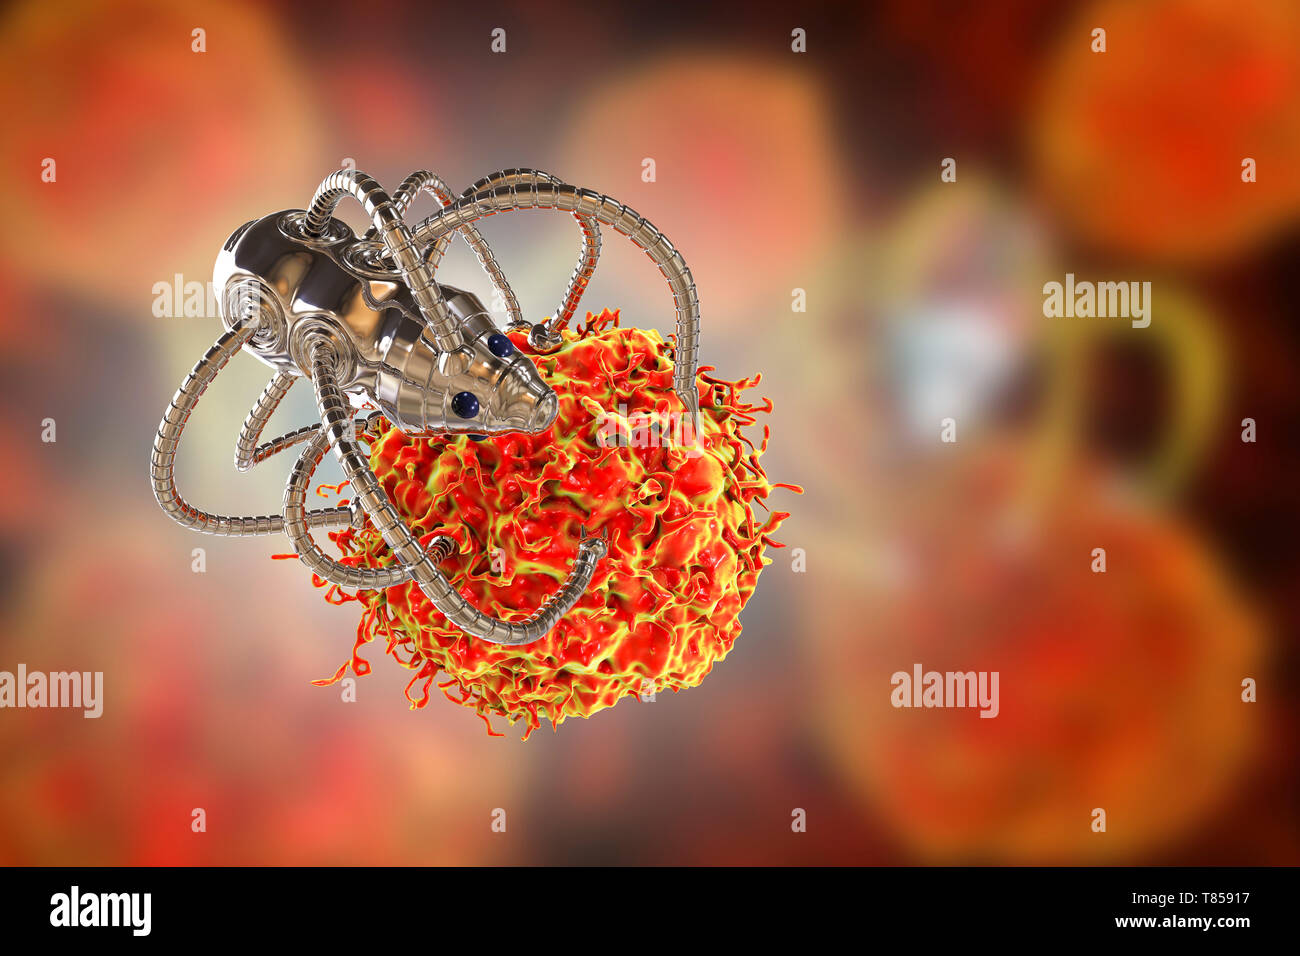 Nanorobots attacking cancer, illustration Stock Photo